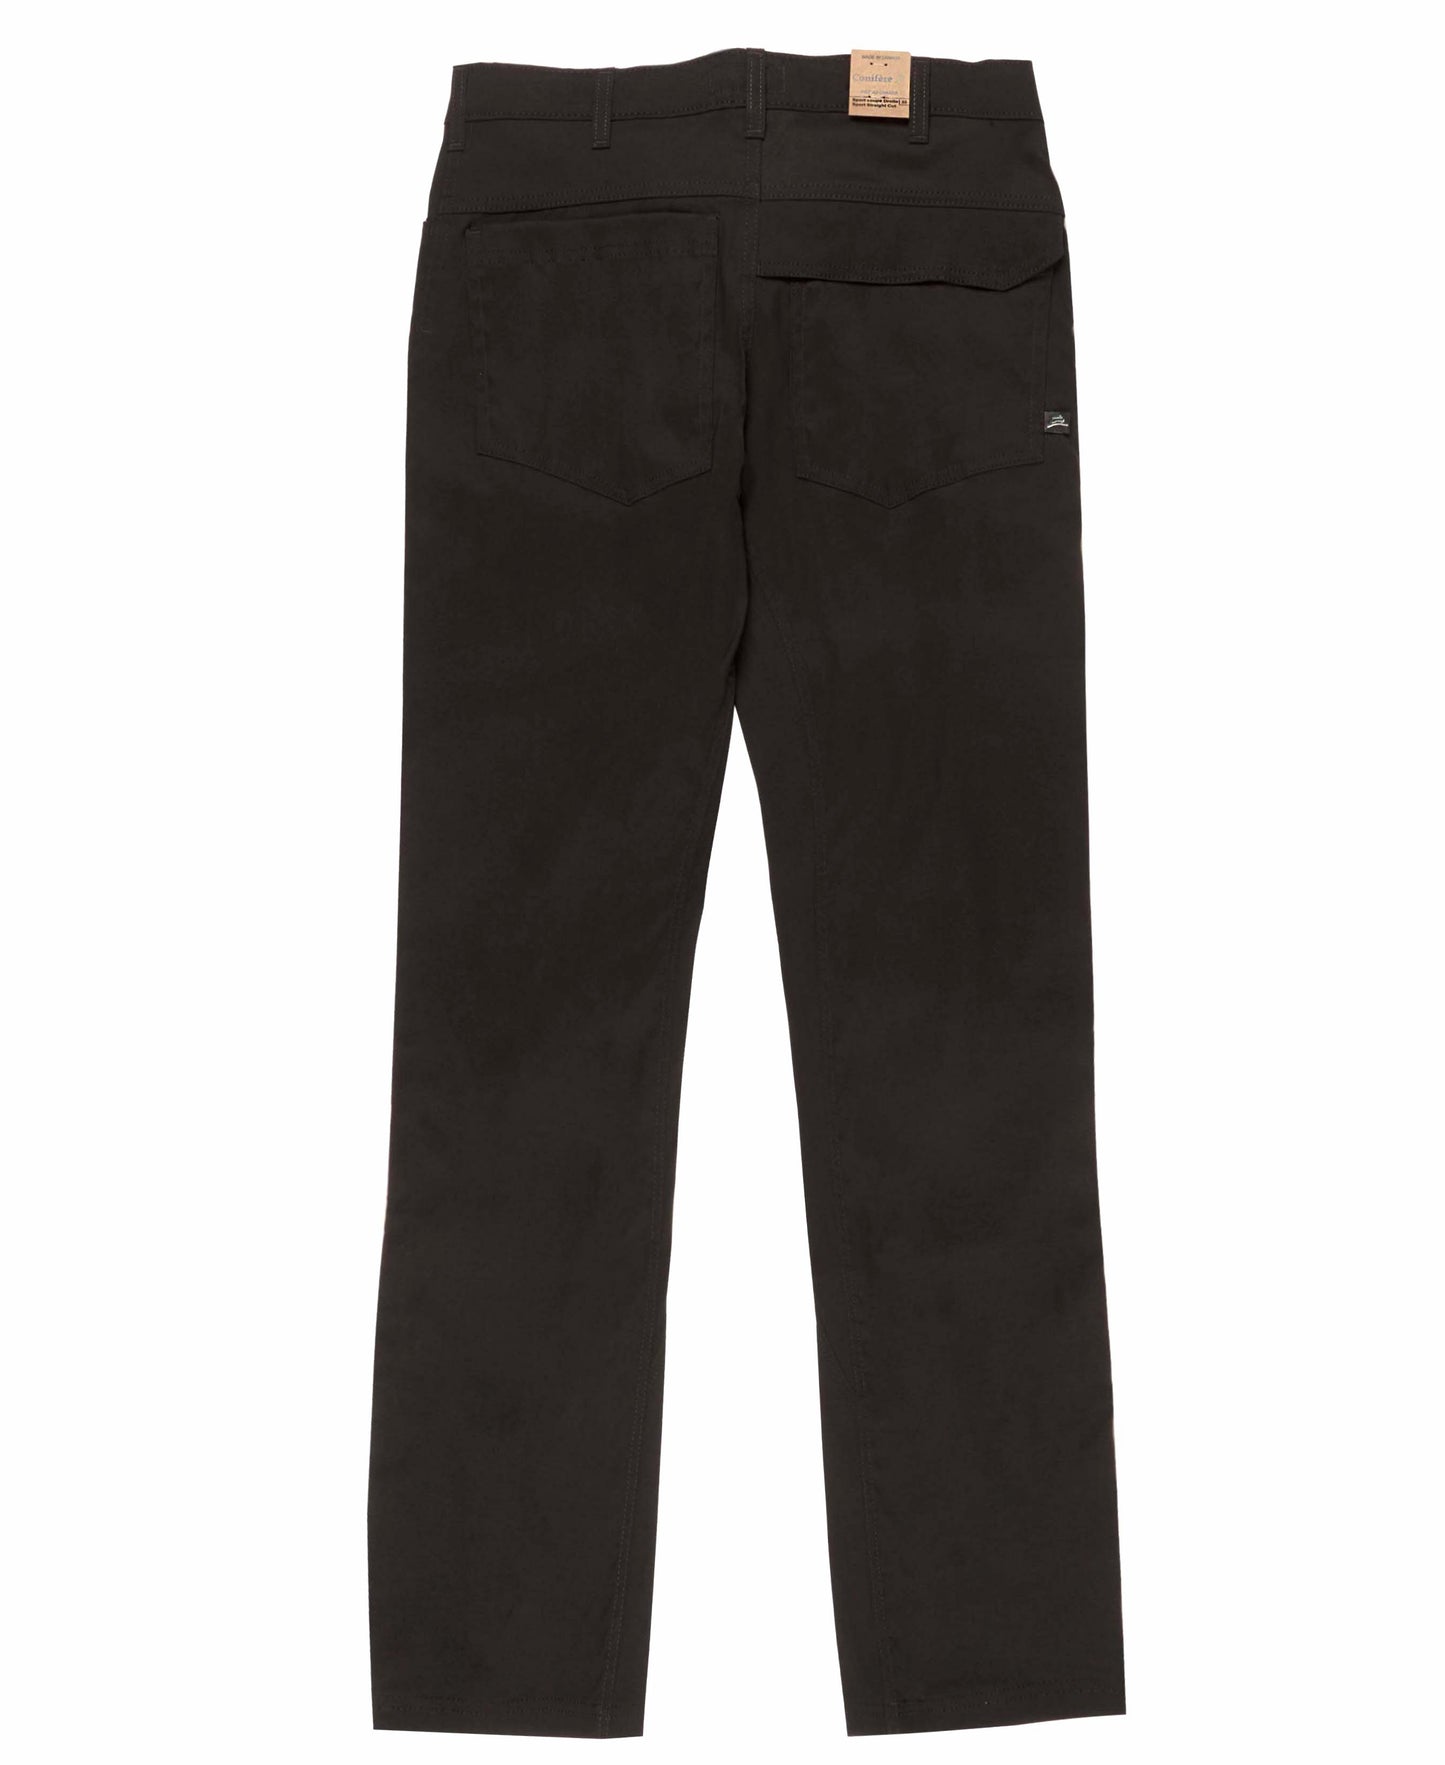 Plein Air Pantalon Noir - Outdoor Black Pants